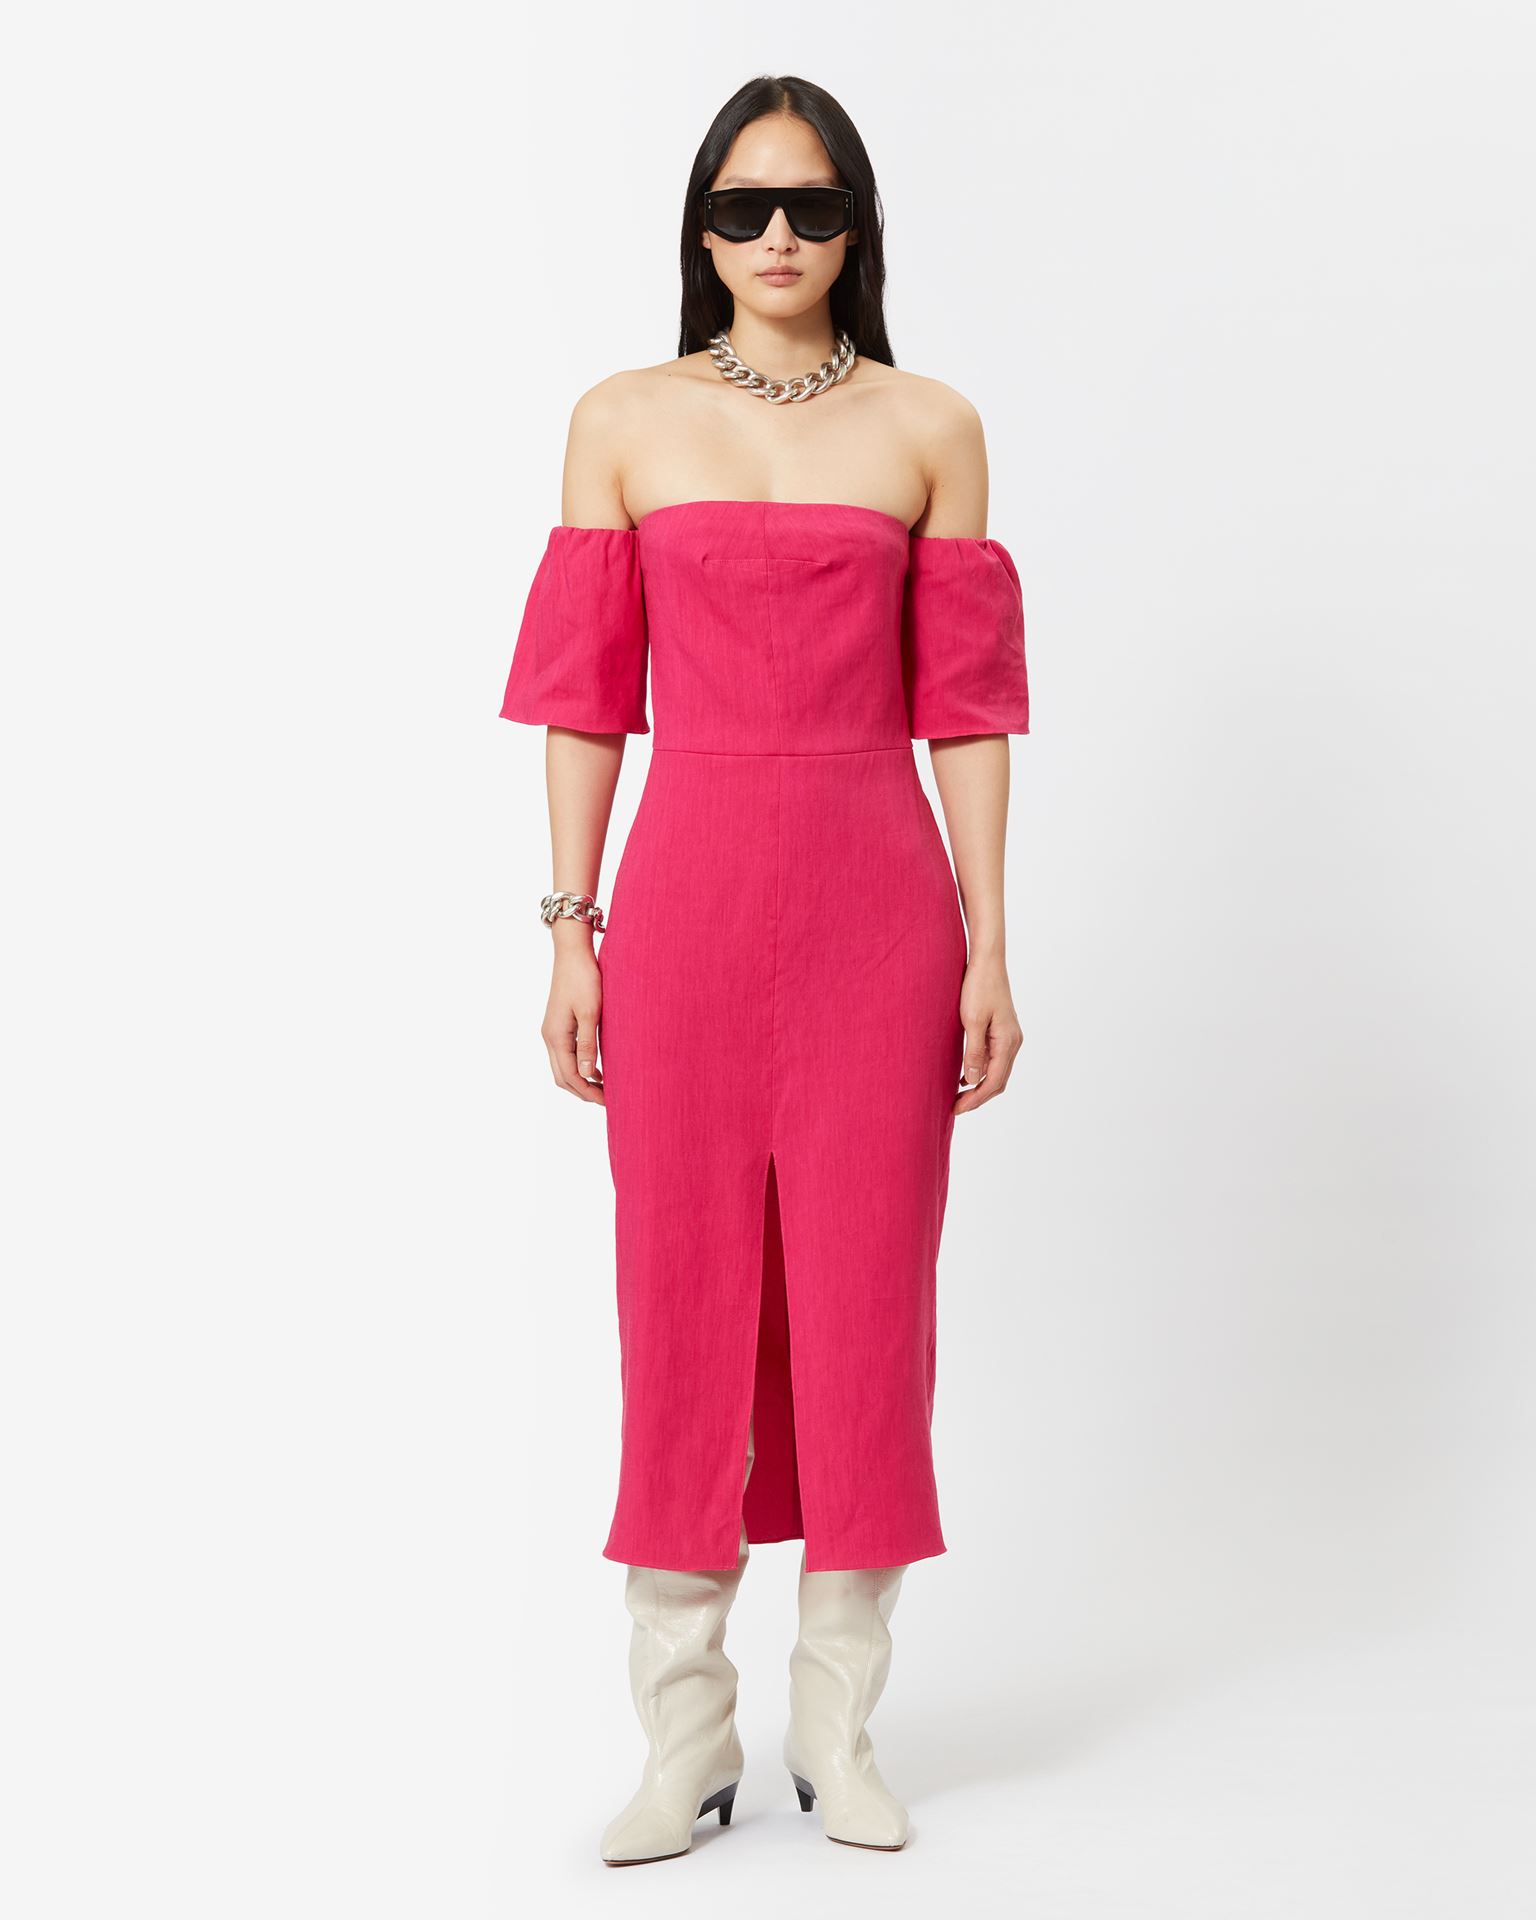 Isabel Marant, Stony Dress - Women - Pink